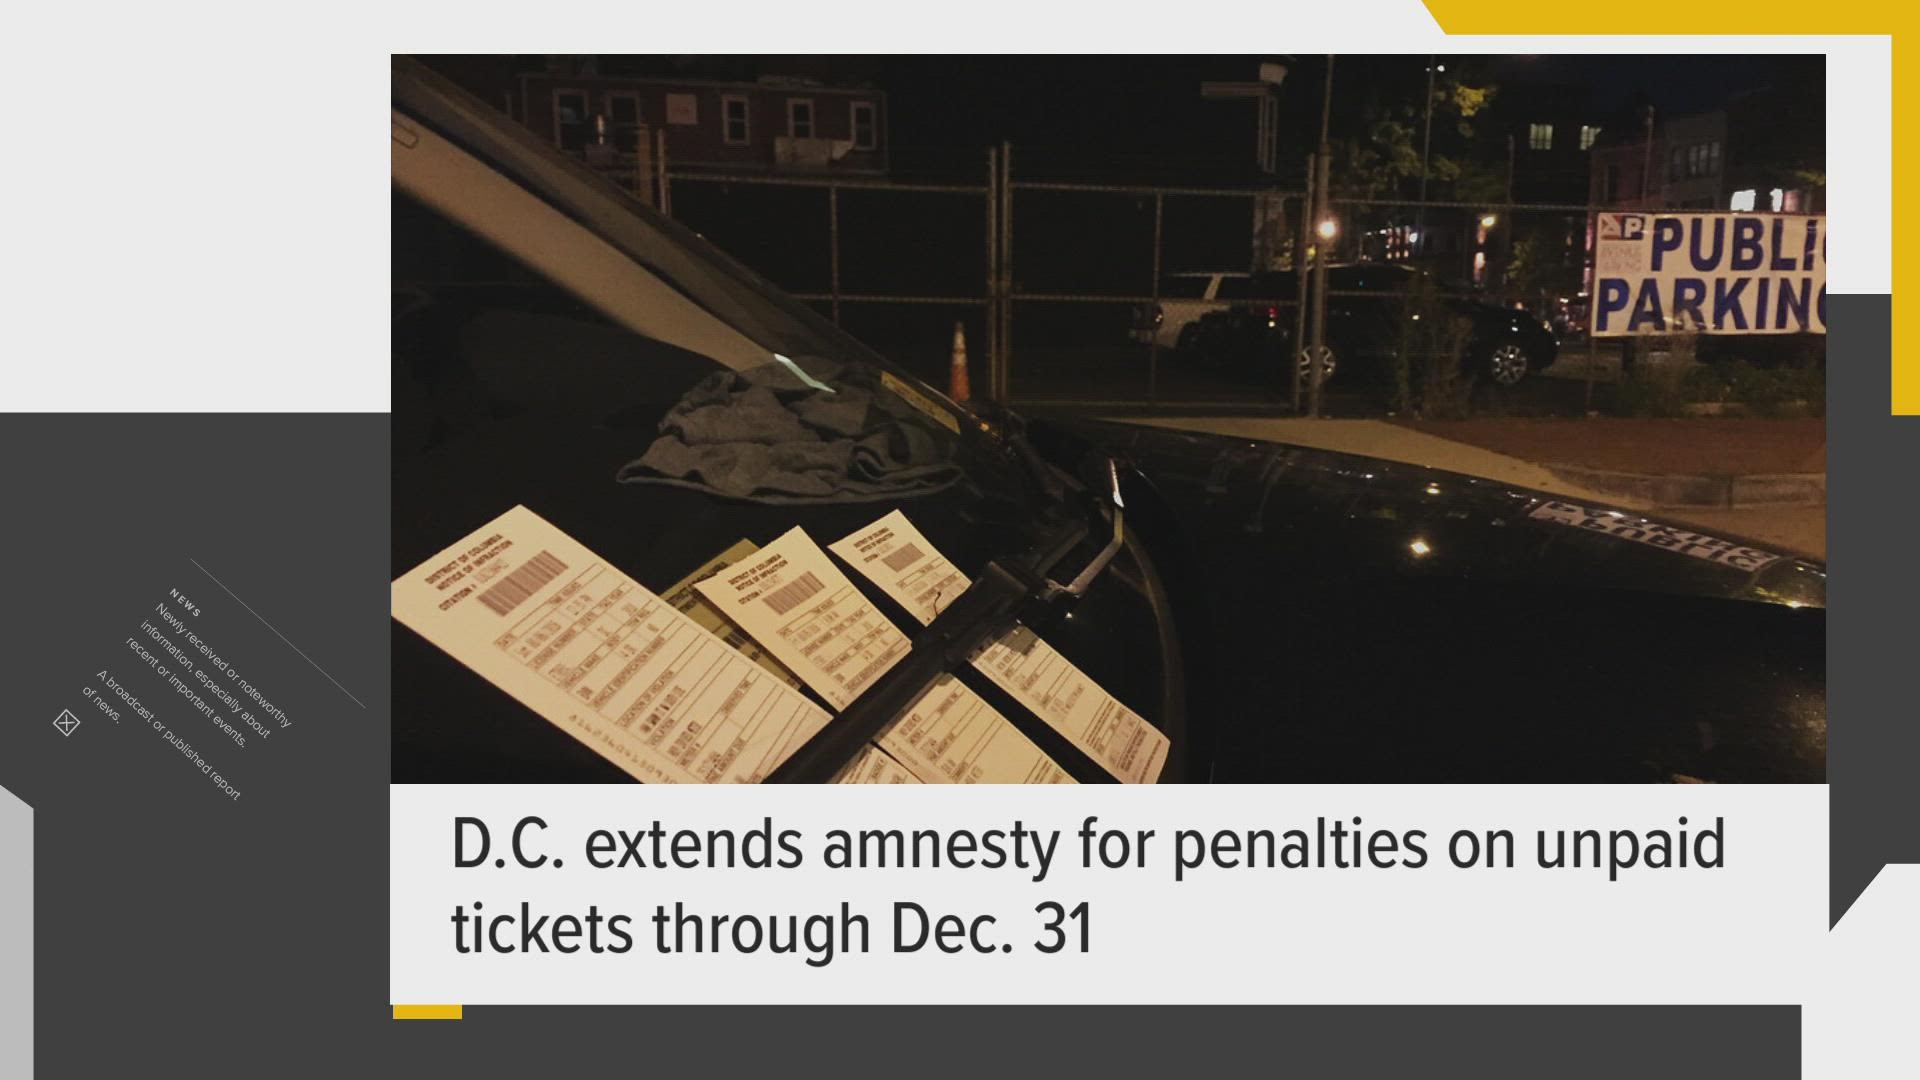 DC ticket amnesty program ends January 1